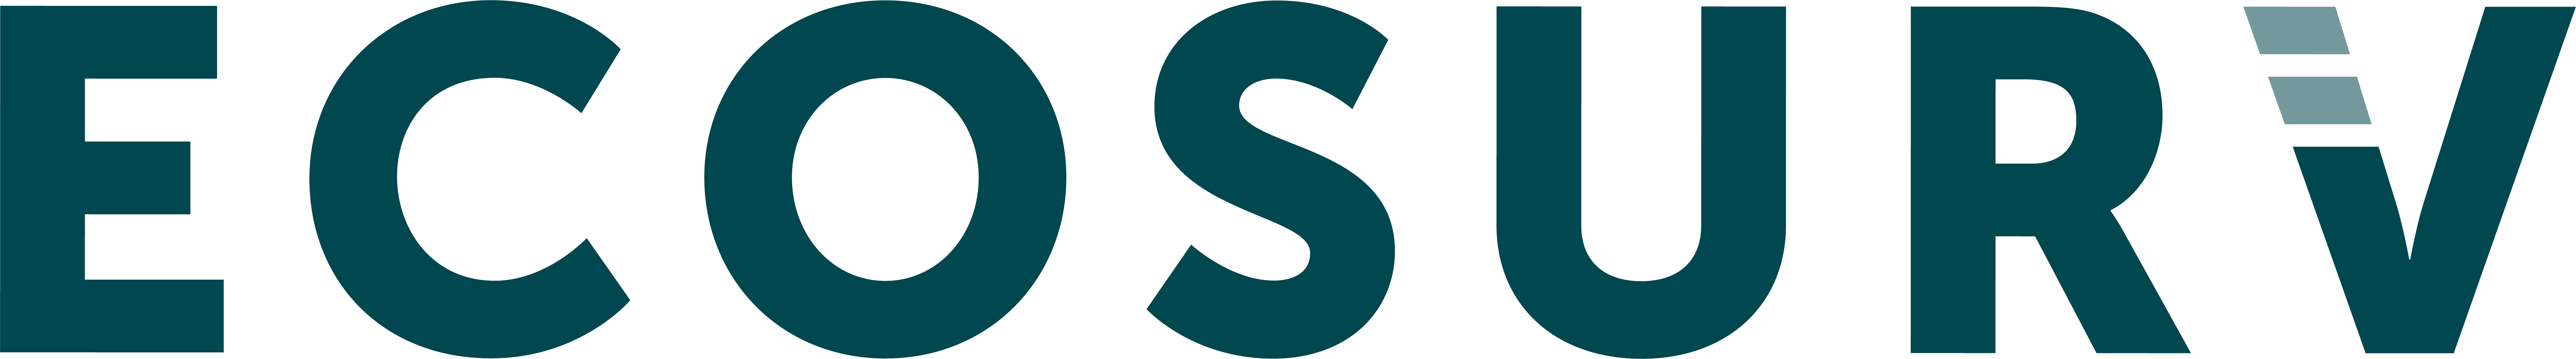 Member Logo